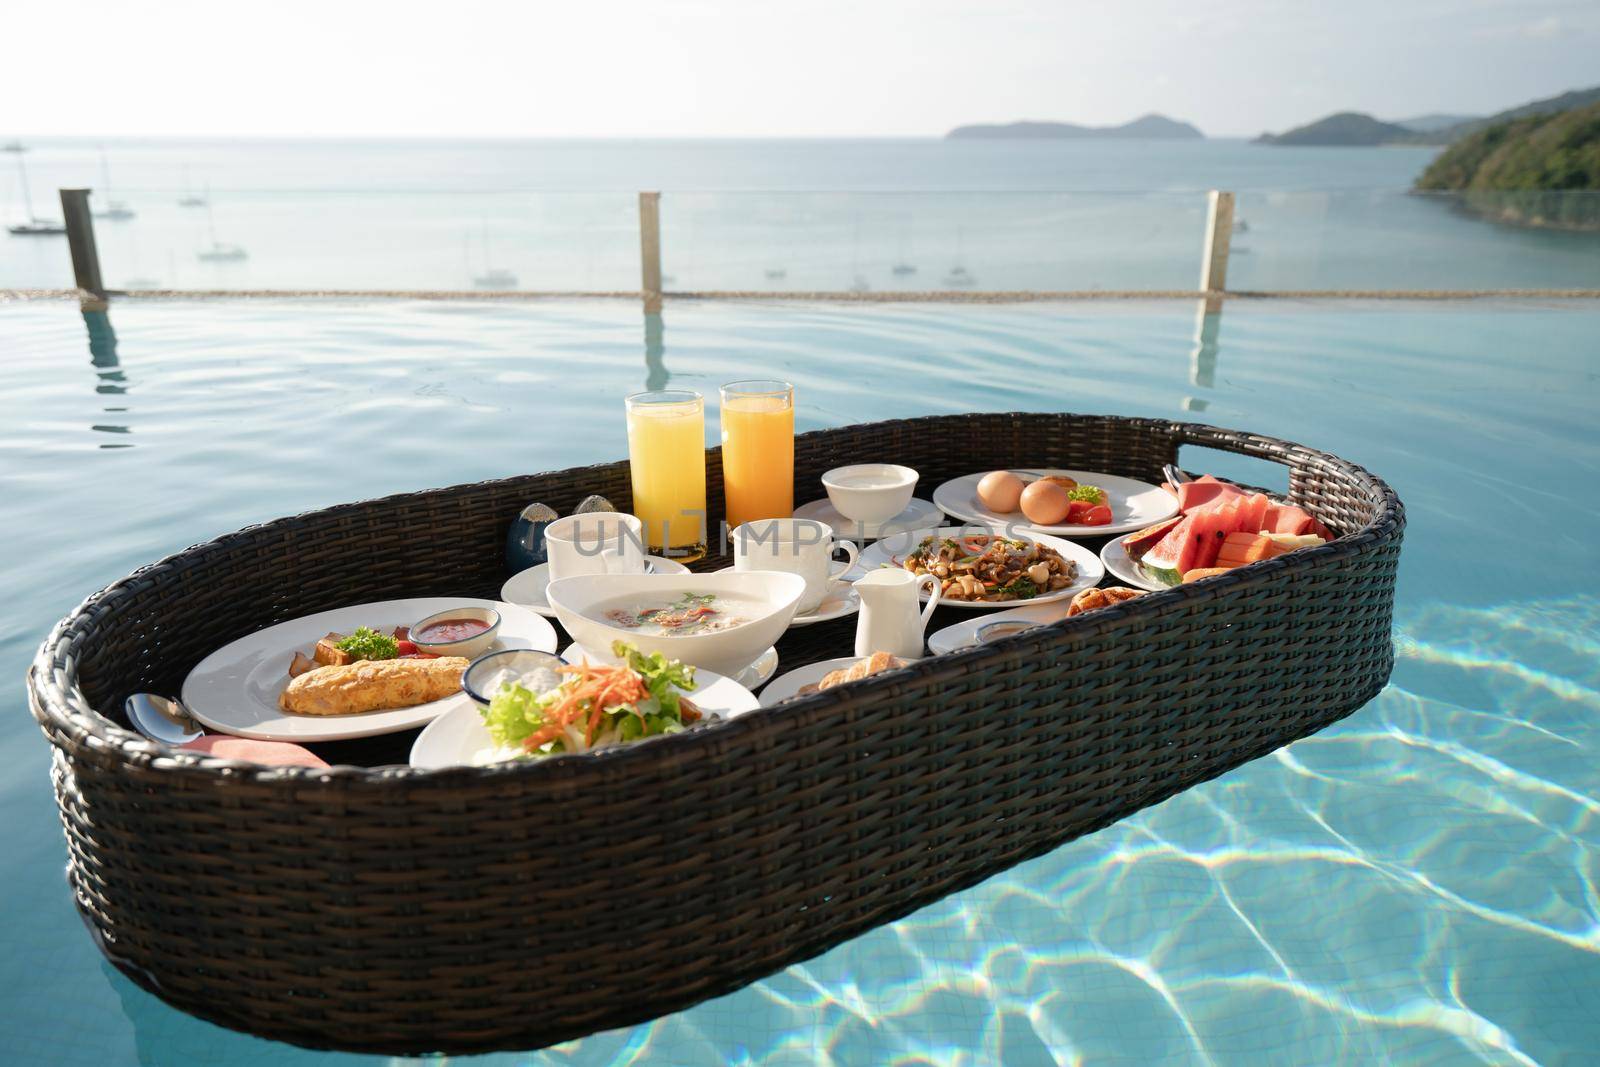 Breakfast set in tray in swimming pool, floating breakfast in tropical resort villa with ocean view. by sirawit99